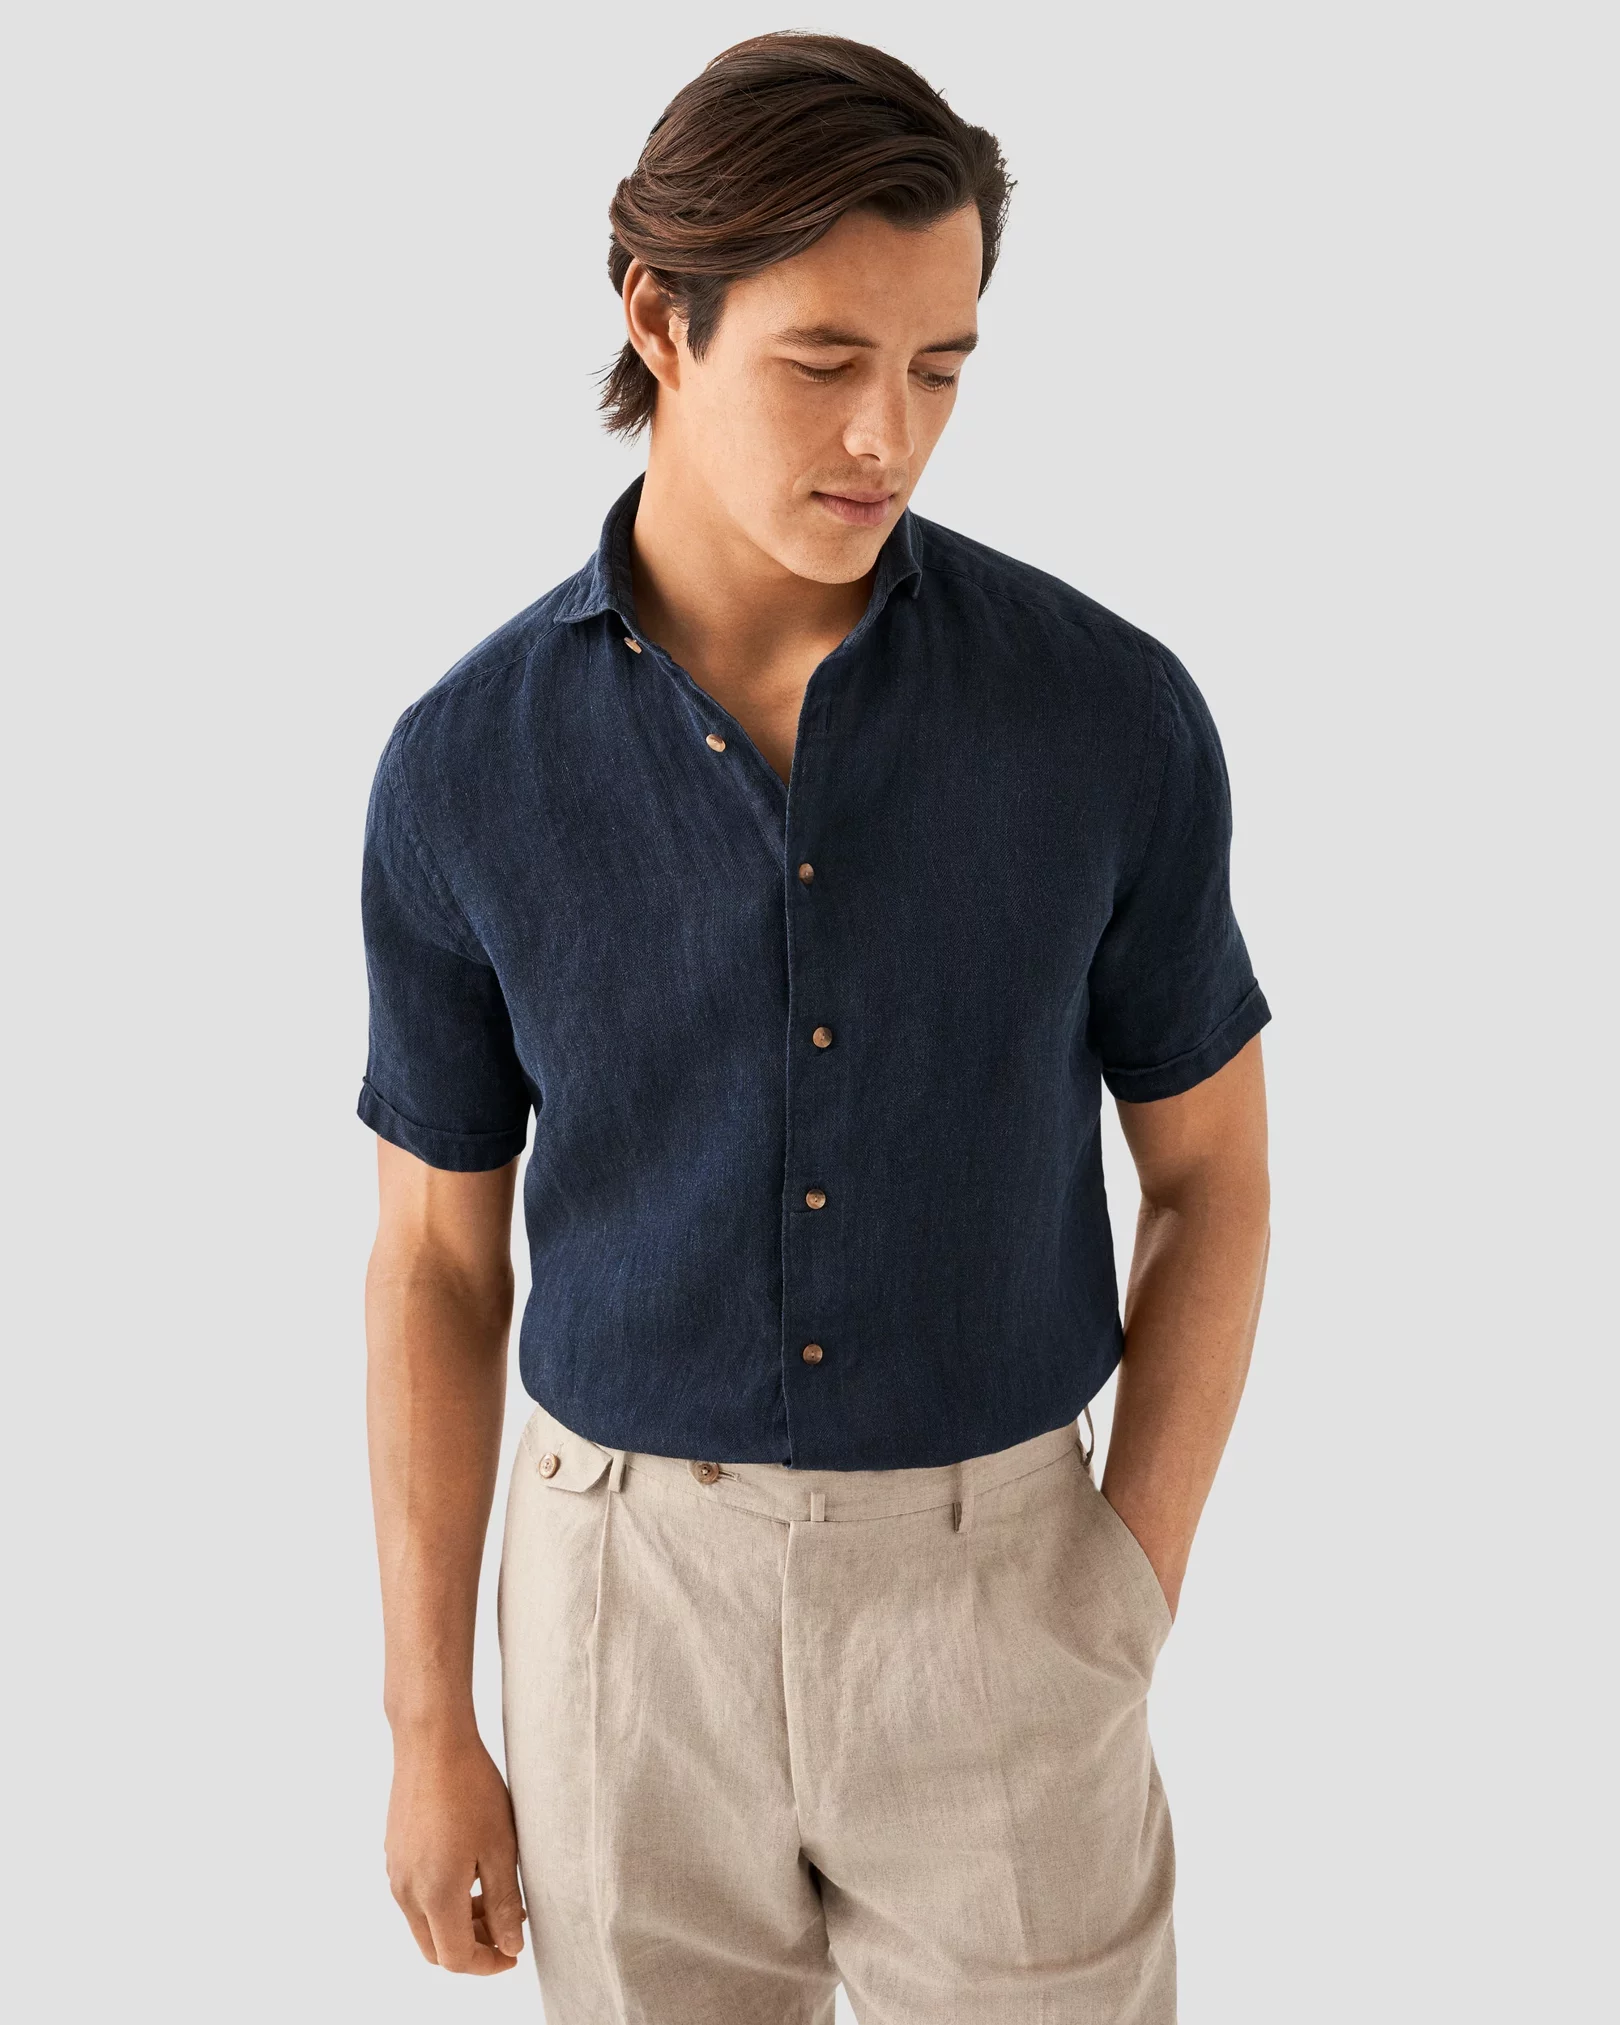 Eton - navy blue linen wide spread short sleeve